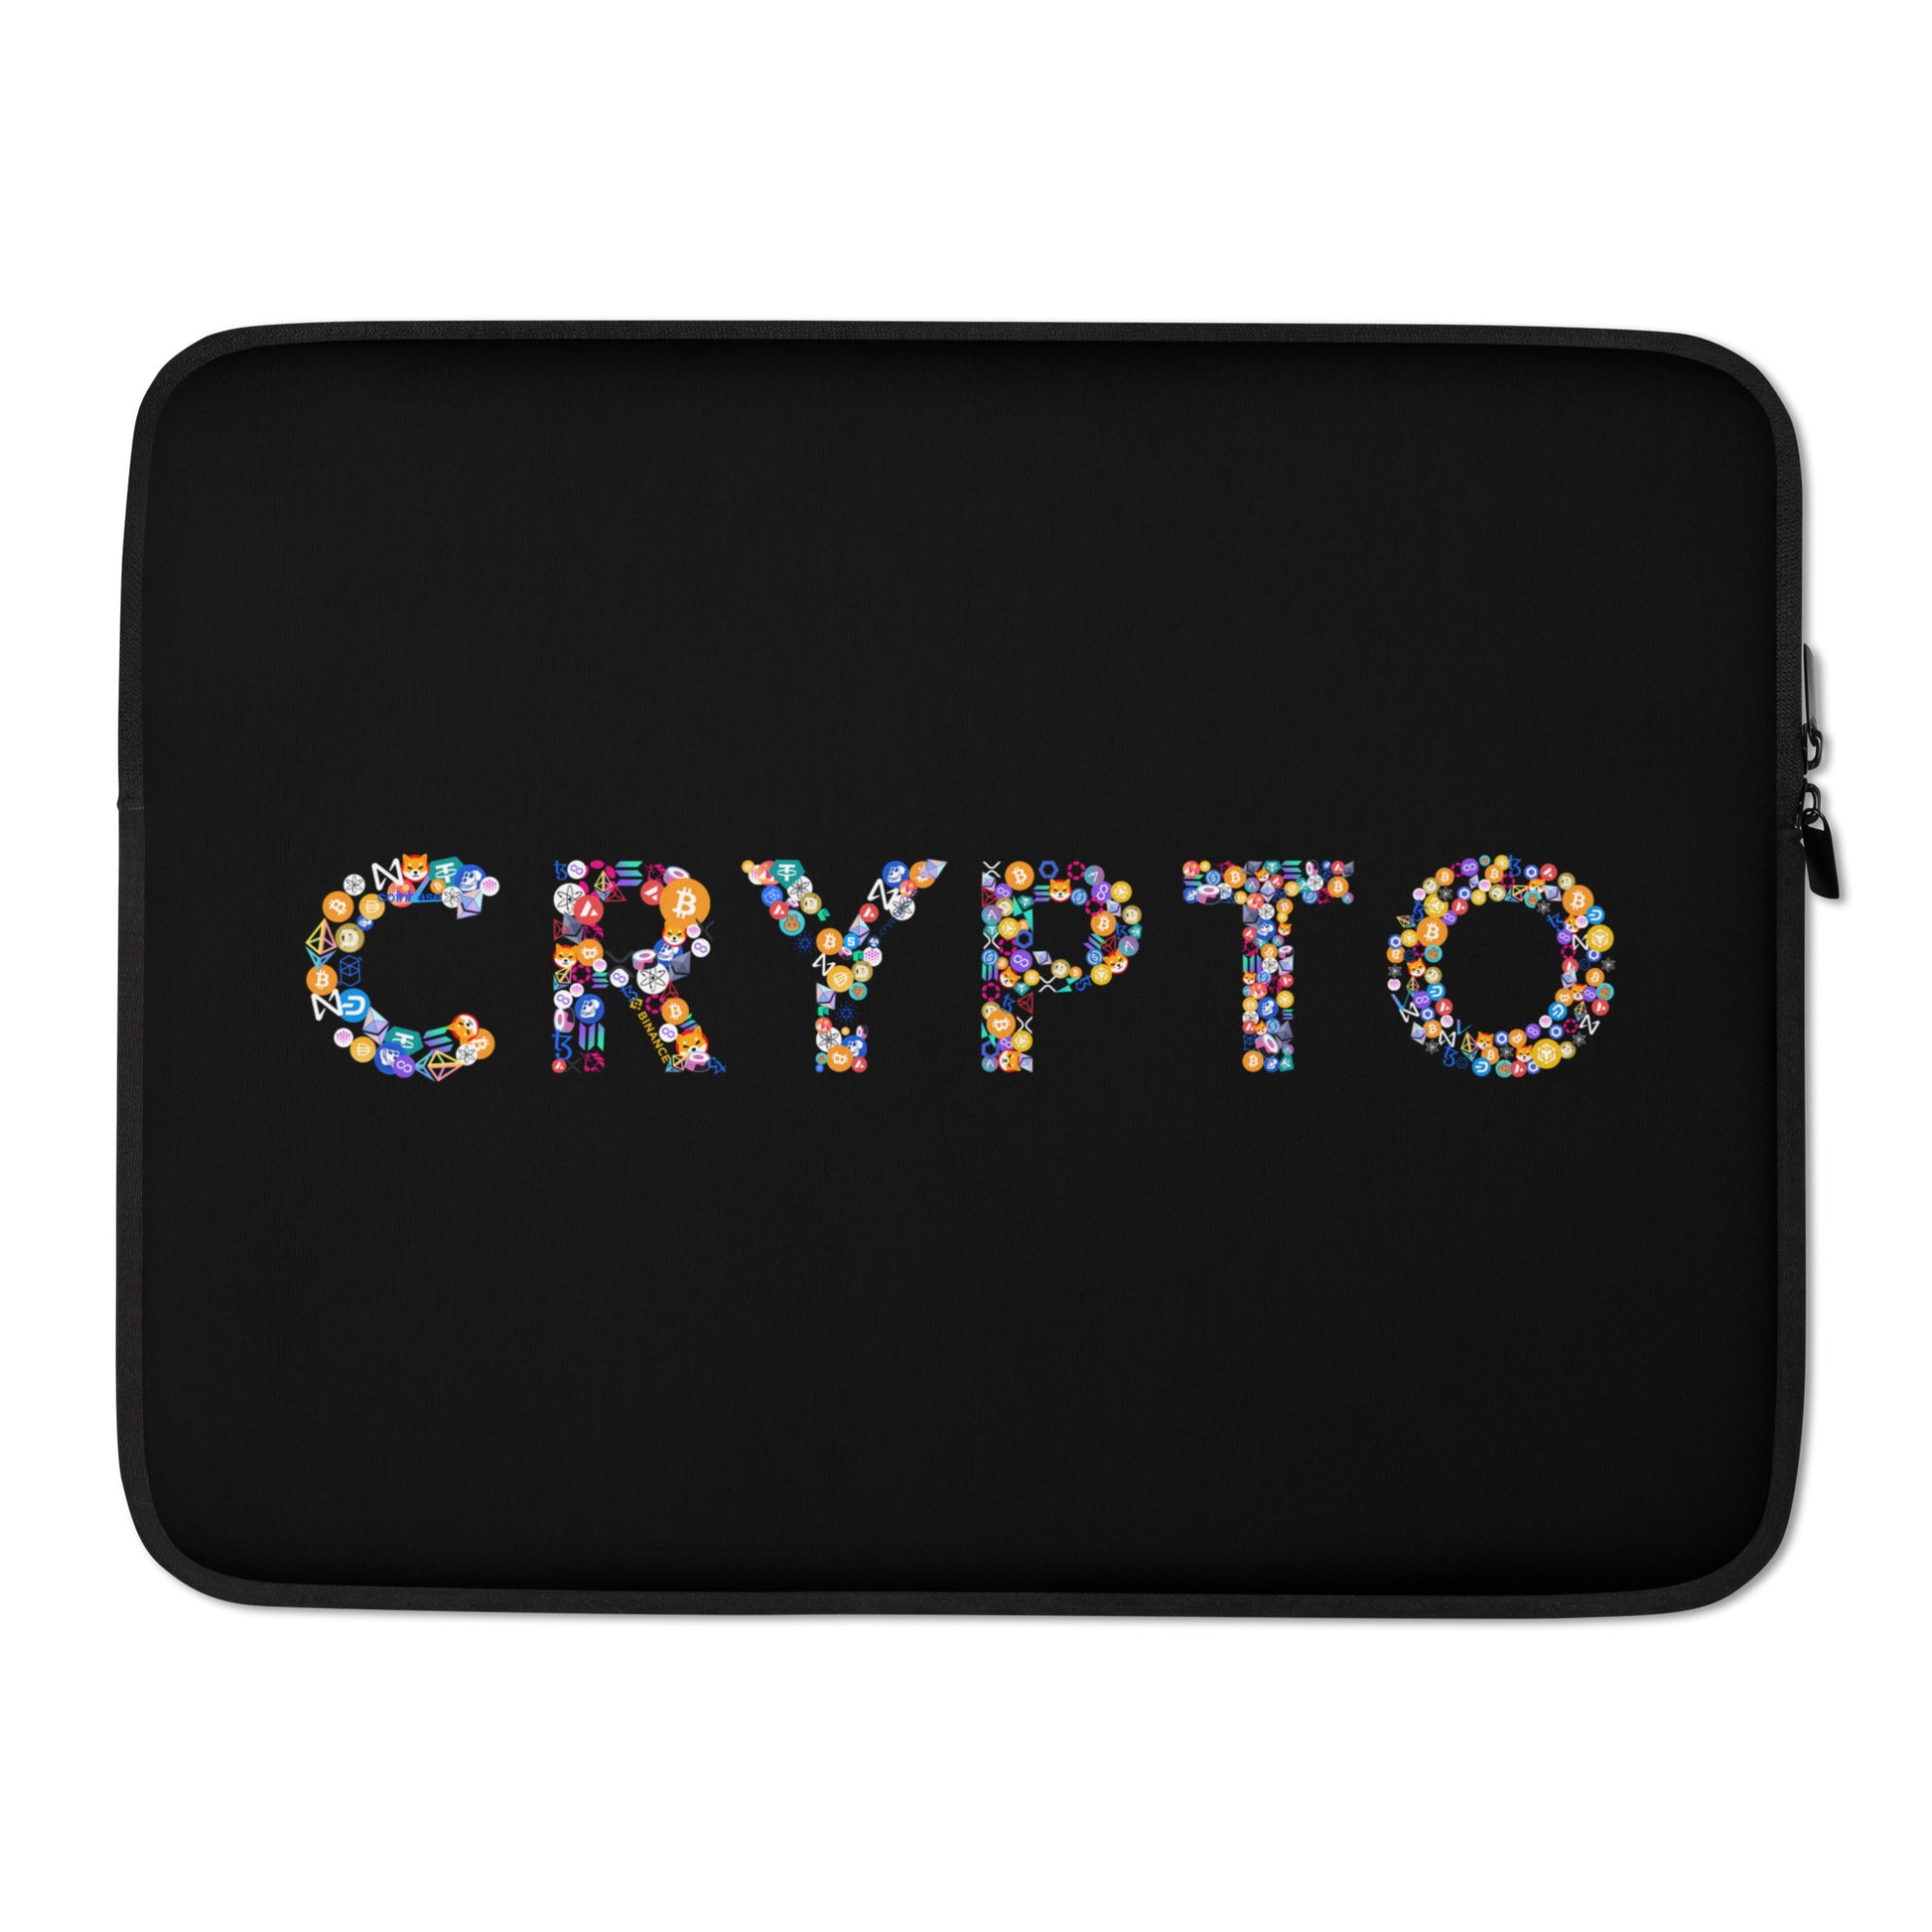 crypto laptop sleeve with crypto logo 